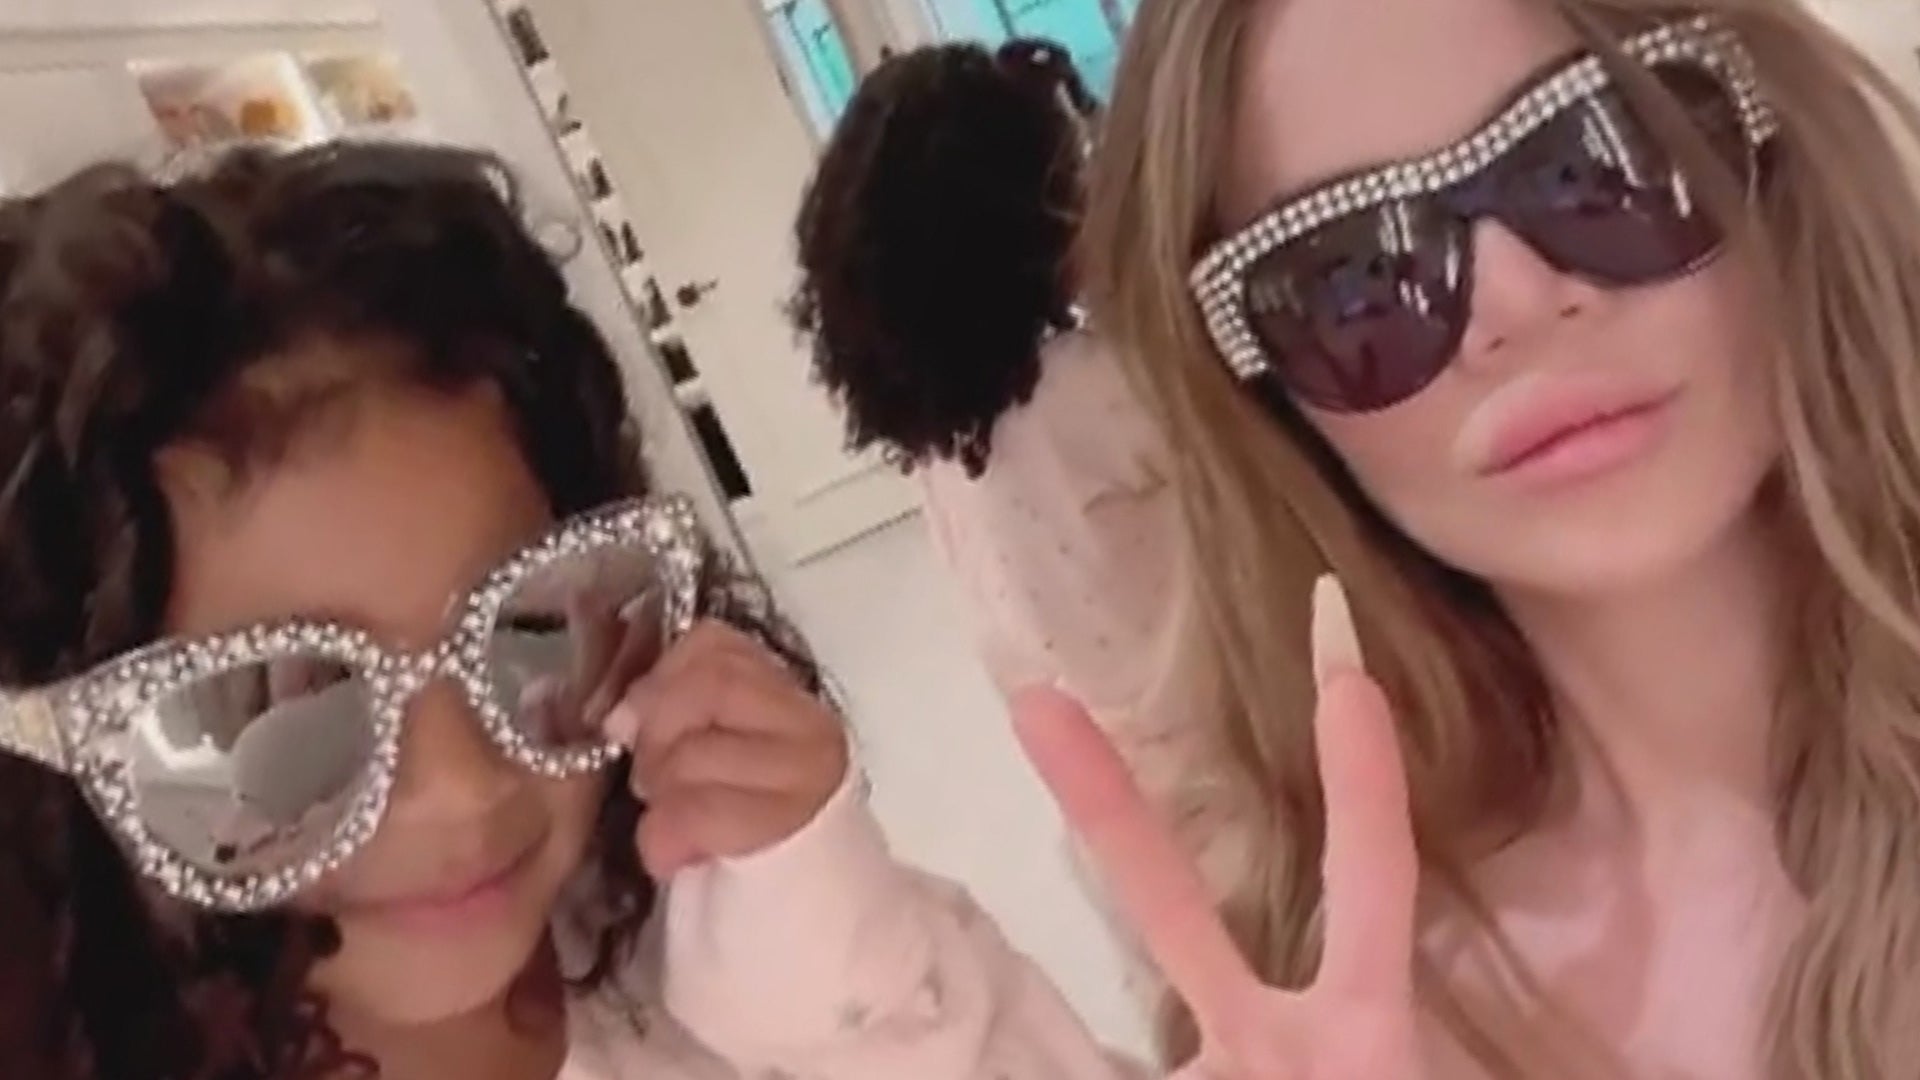 Watch Khloé Kardashian and Daughter True RAP About Being 'Fancy Girls'